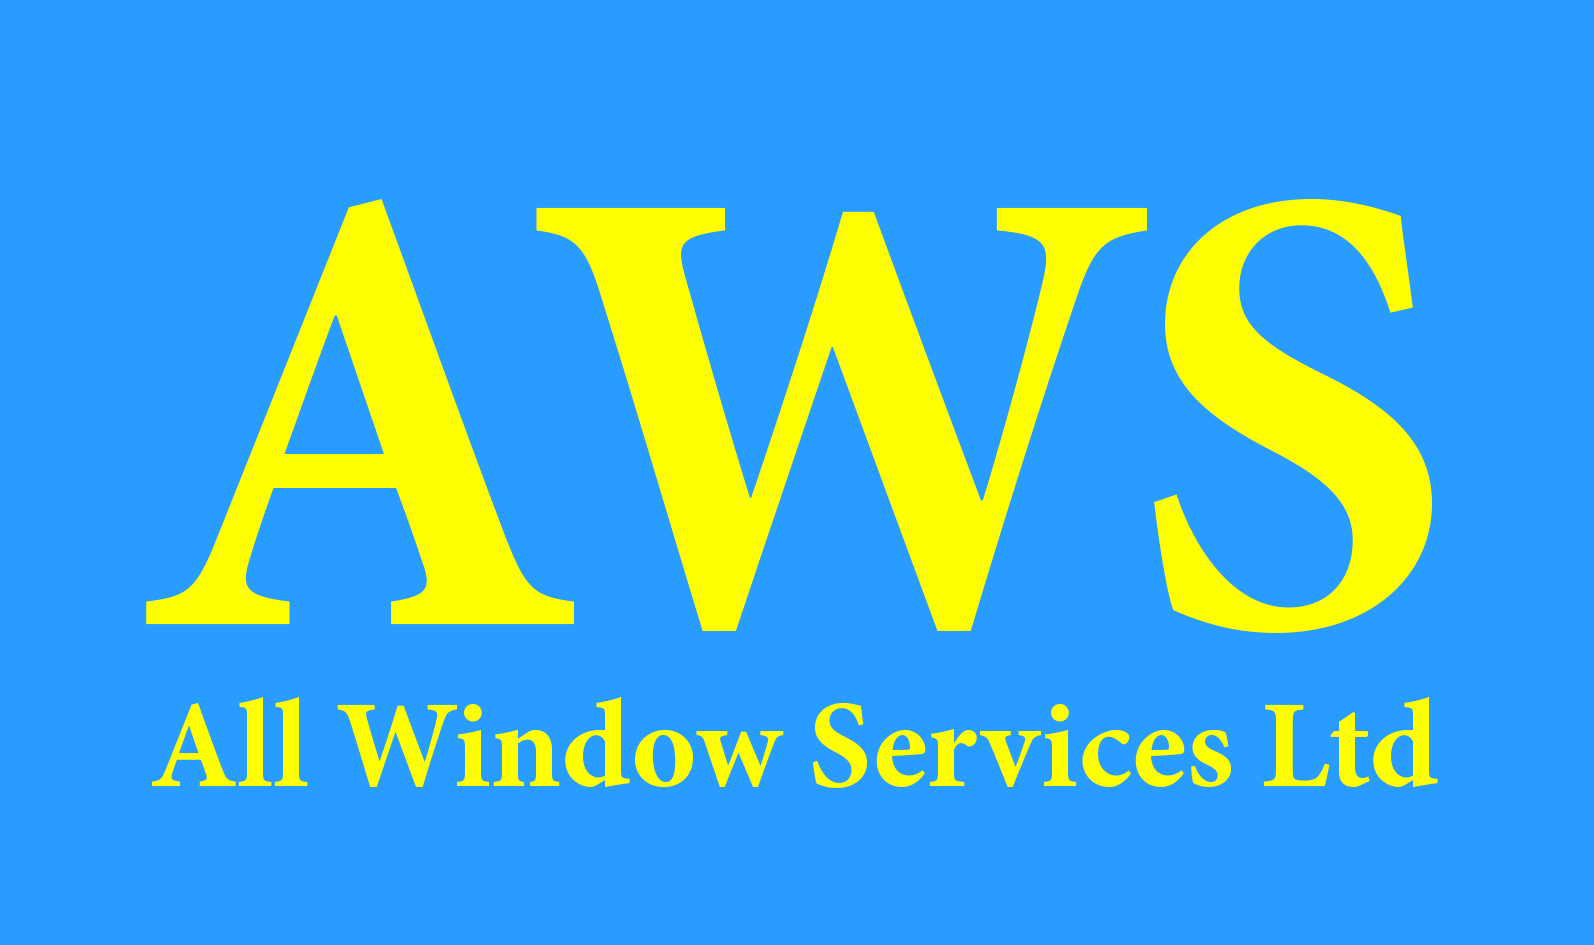 All Window Services Ltd logo